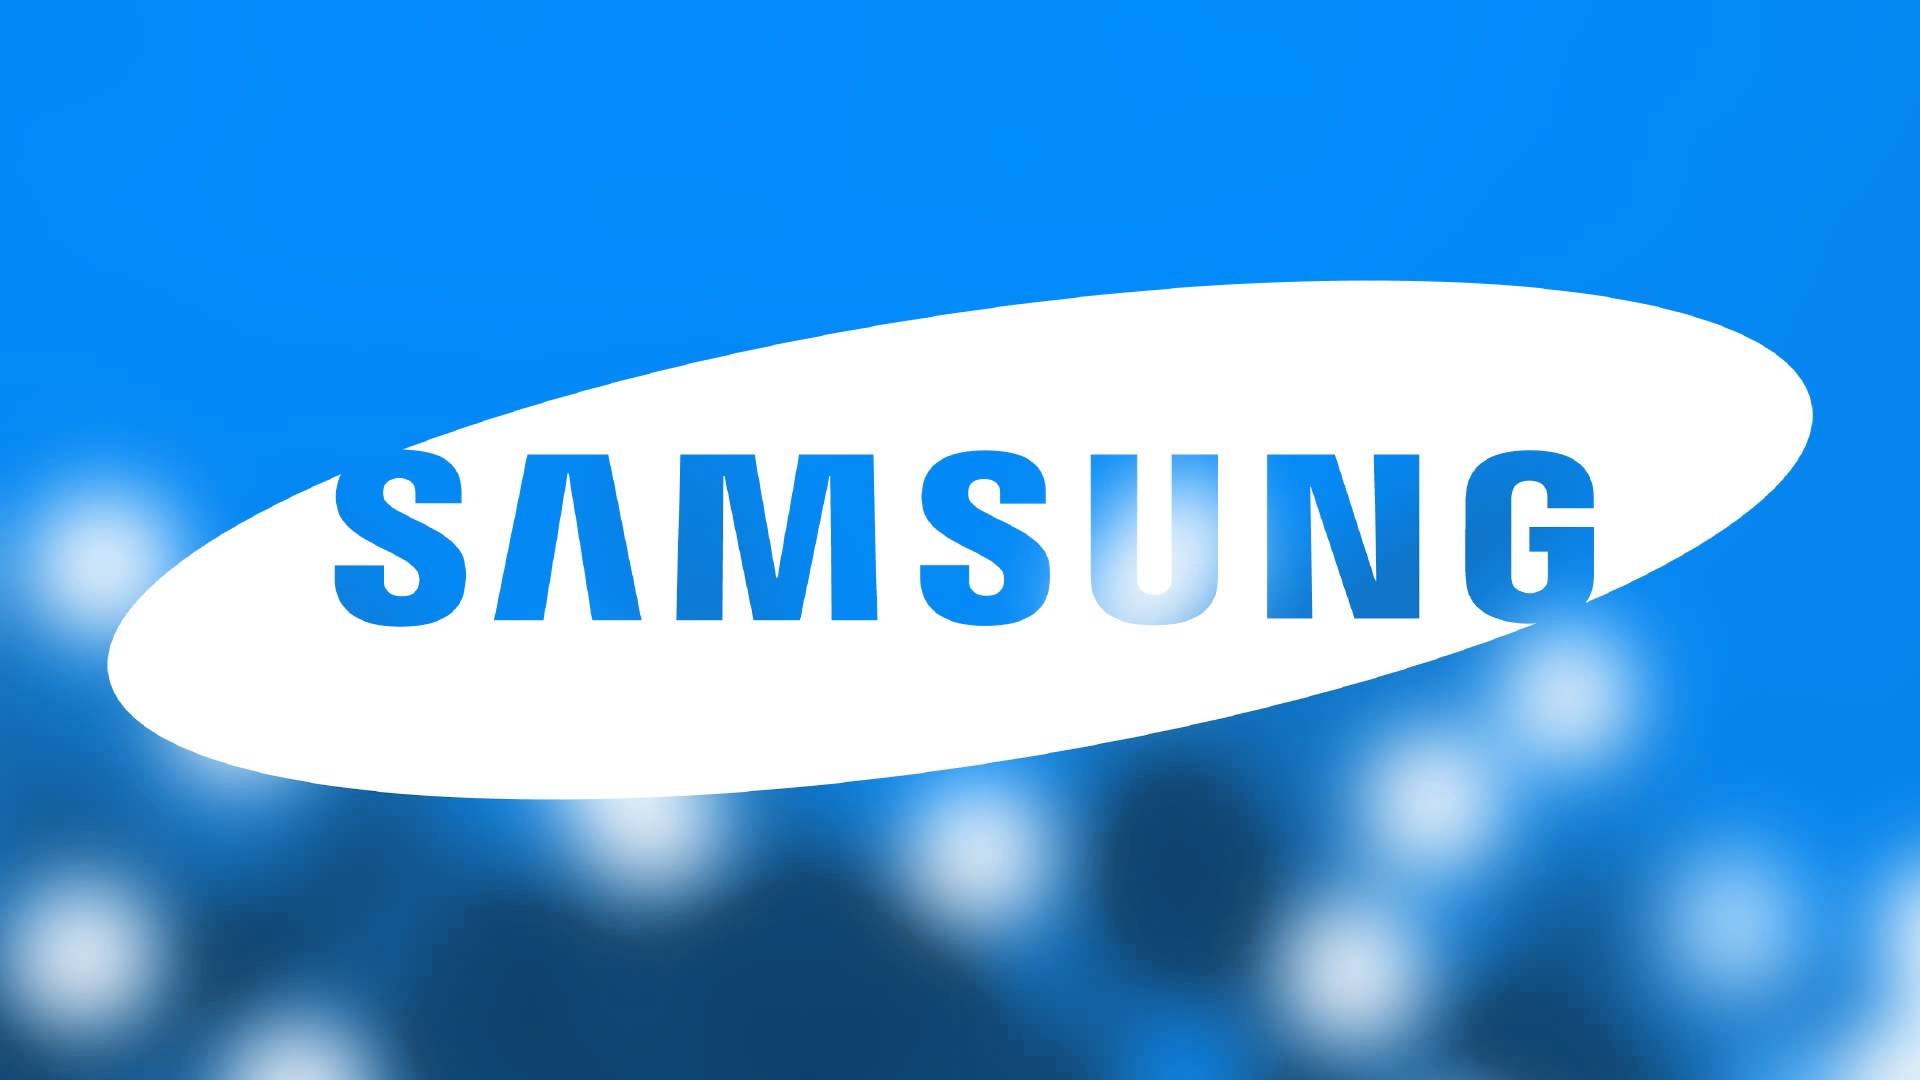 Samsung LED TV Logo Wallpapers - Wallpaper Cave